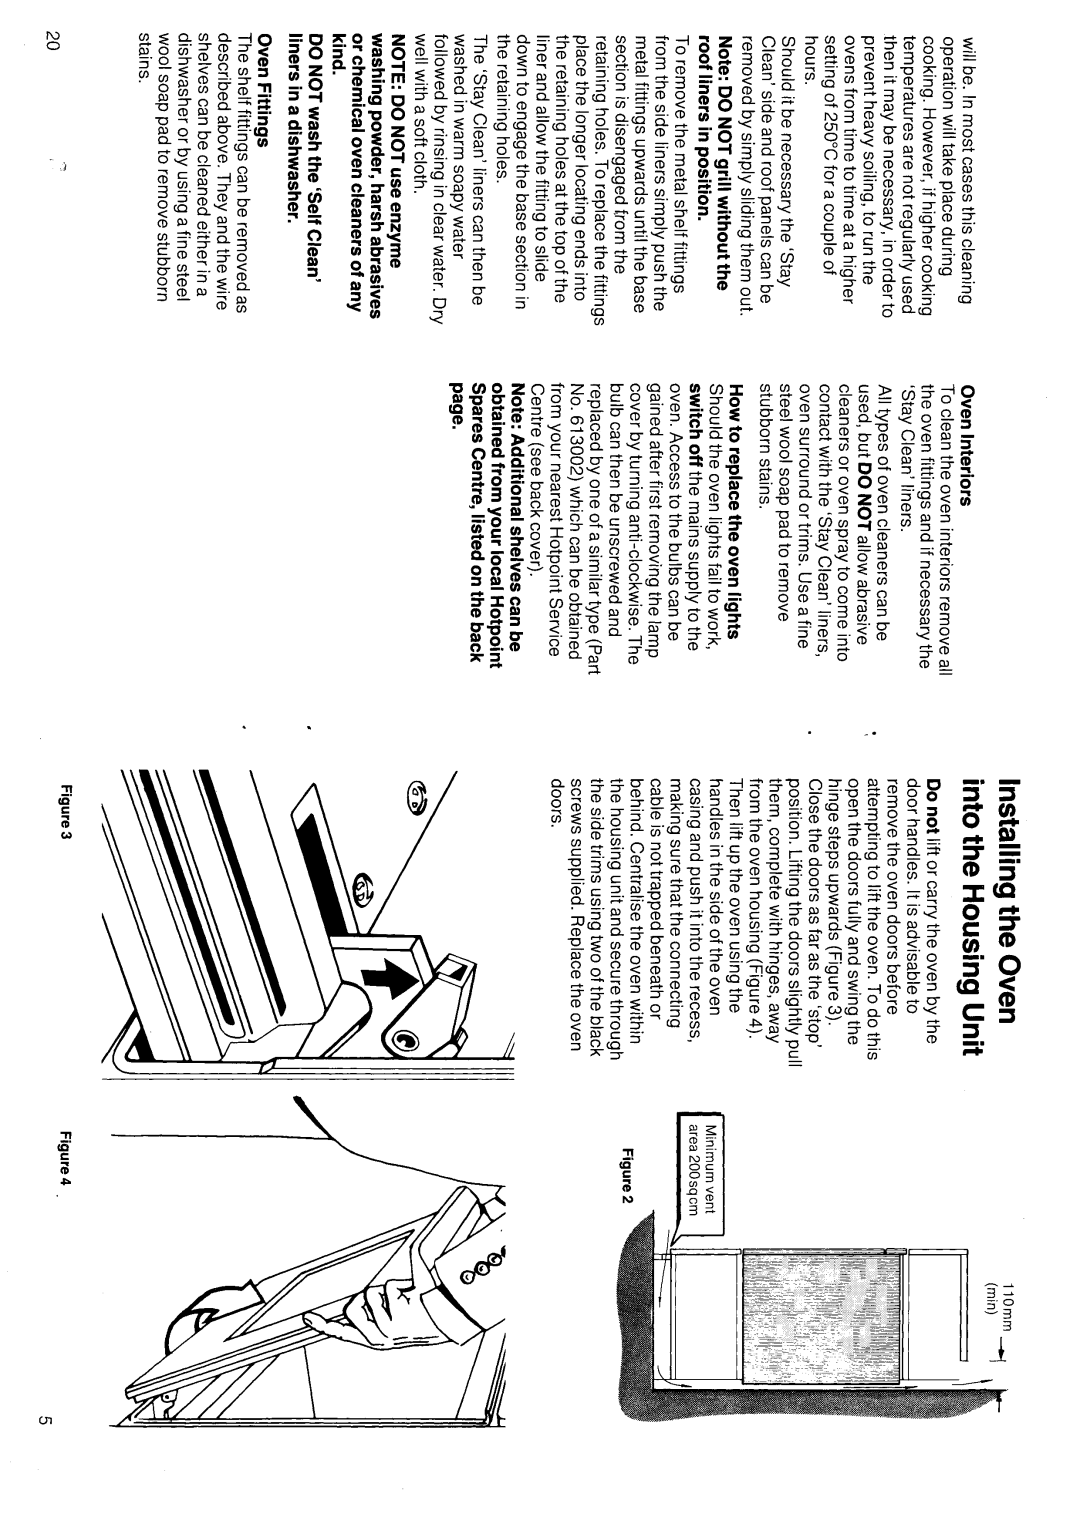 Hotpoint 6192 manual 